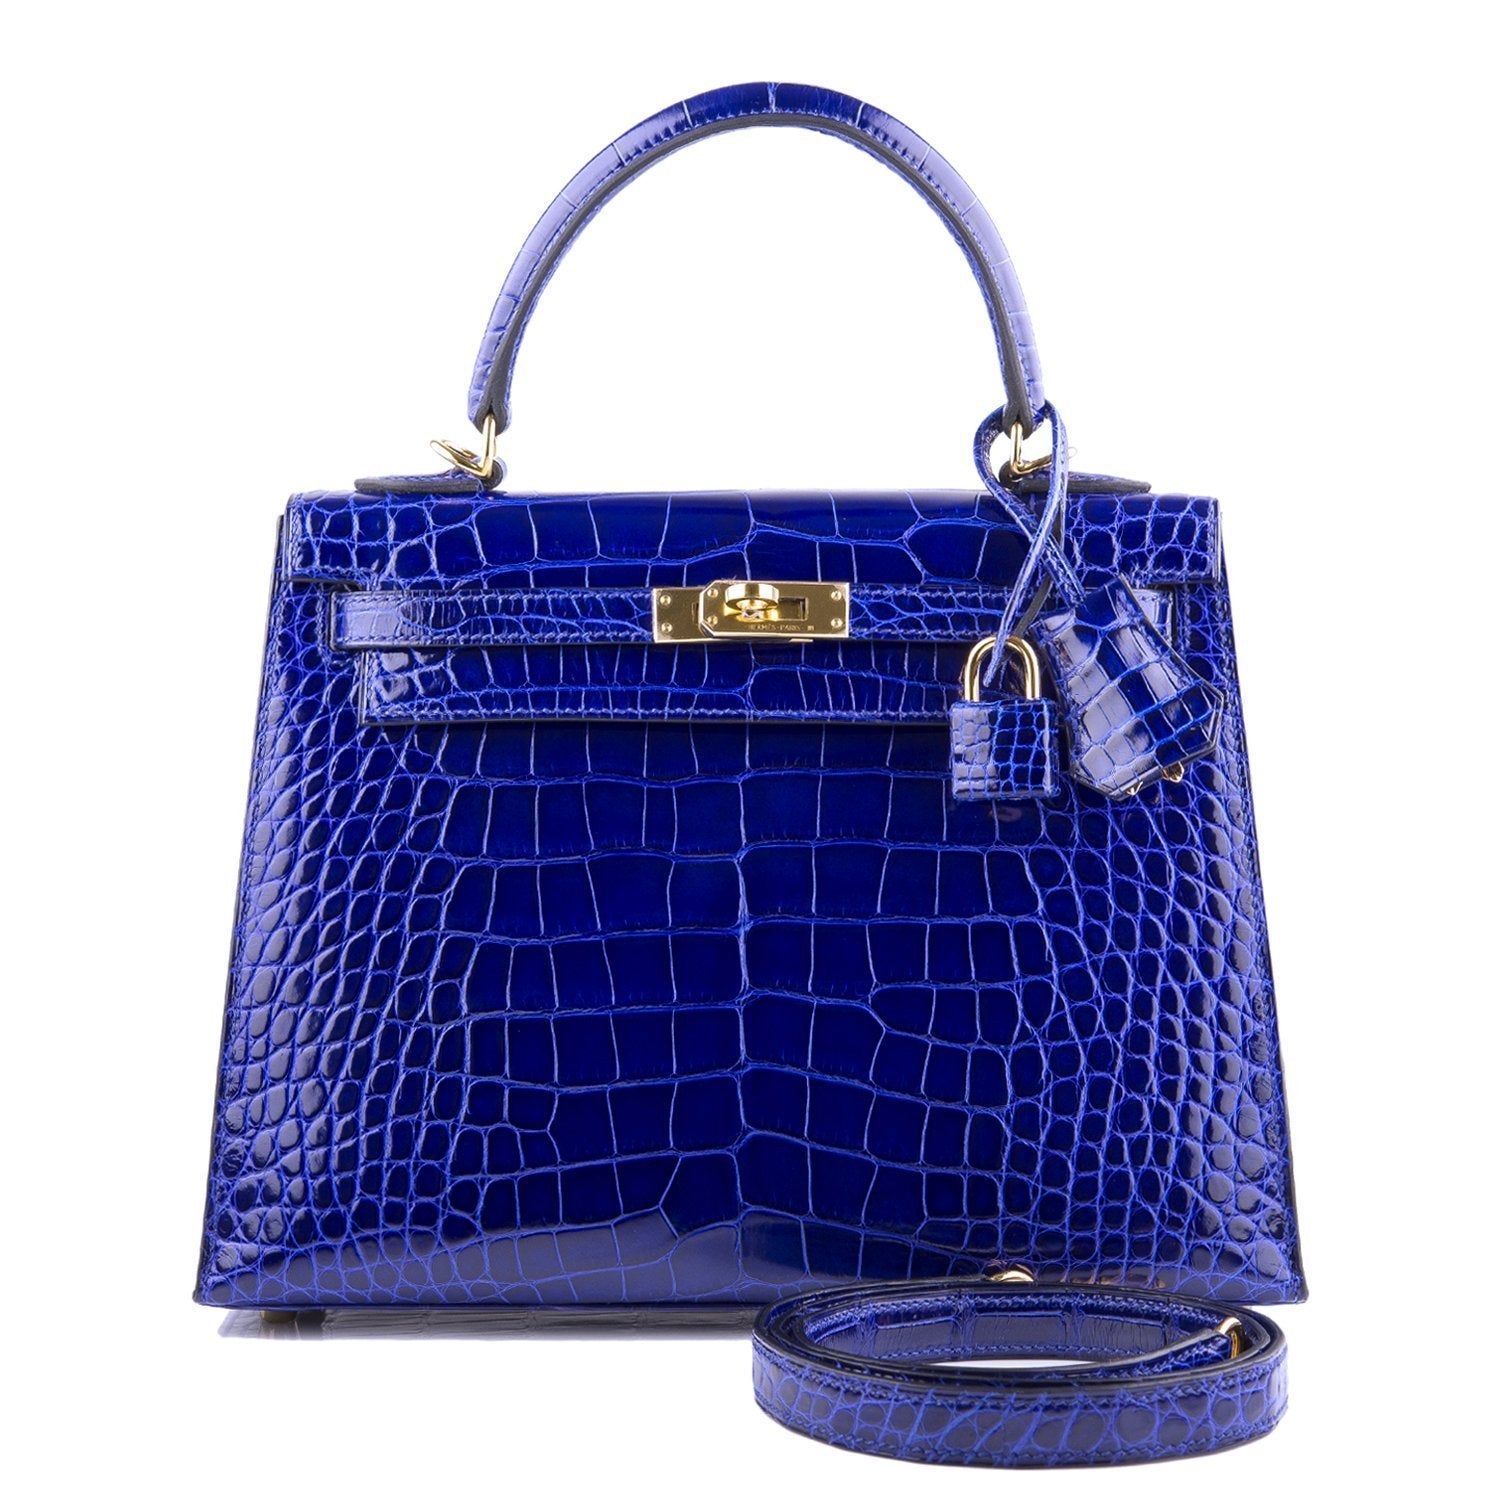 Discover Hermès Exotics 🐊 Bags as Rare as You - Madison Avenue Couture